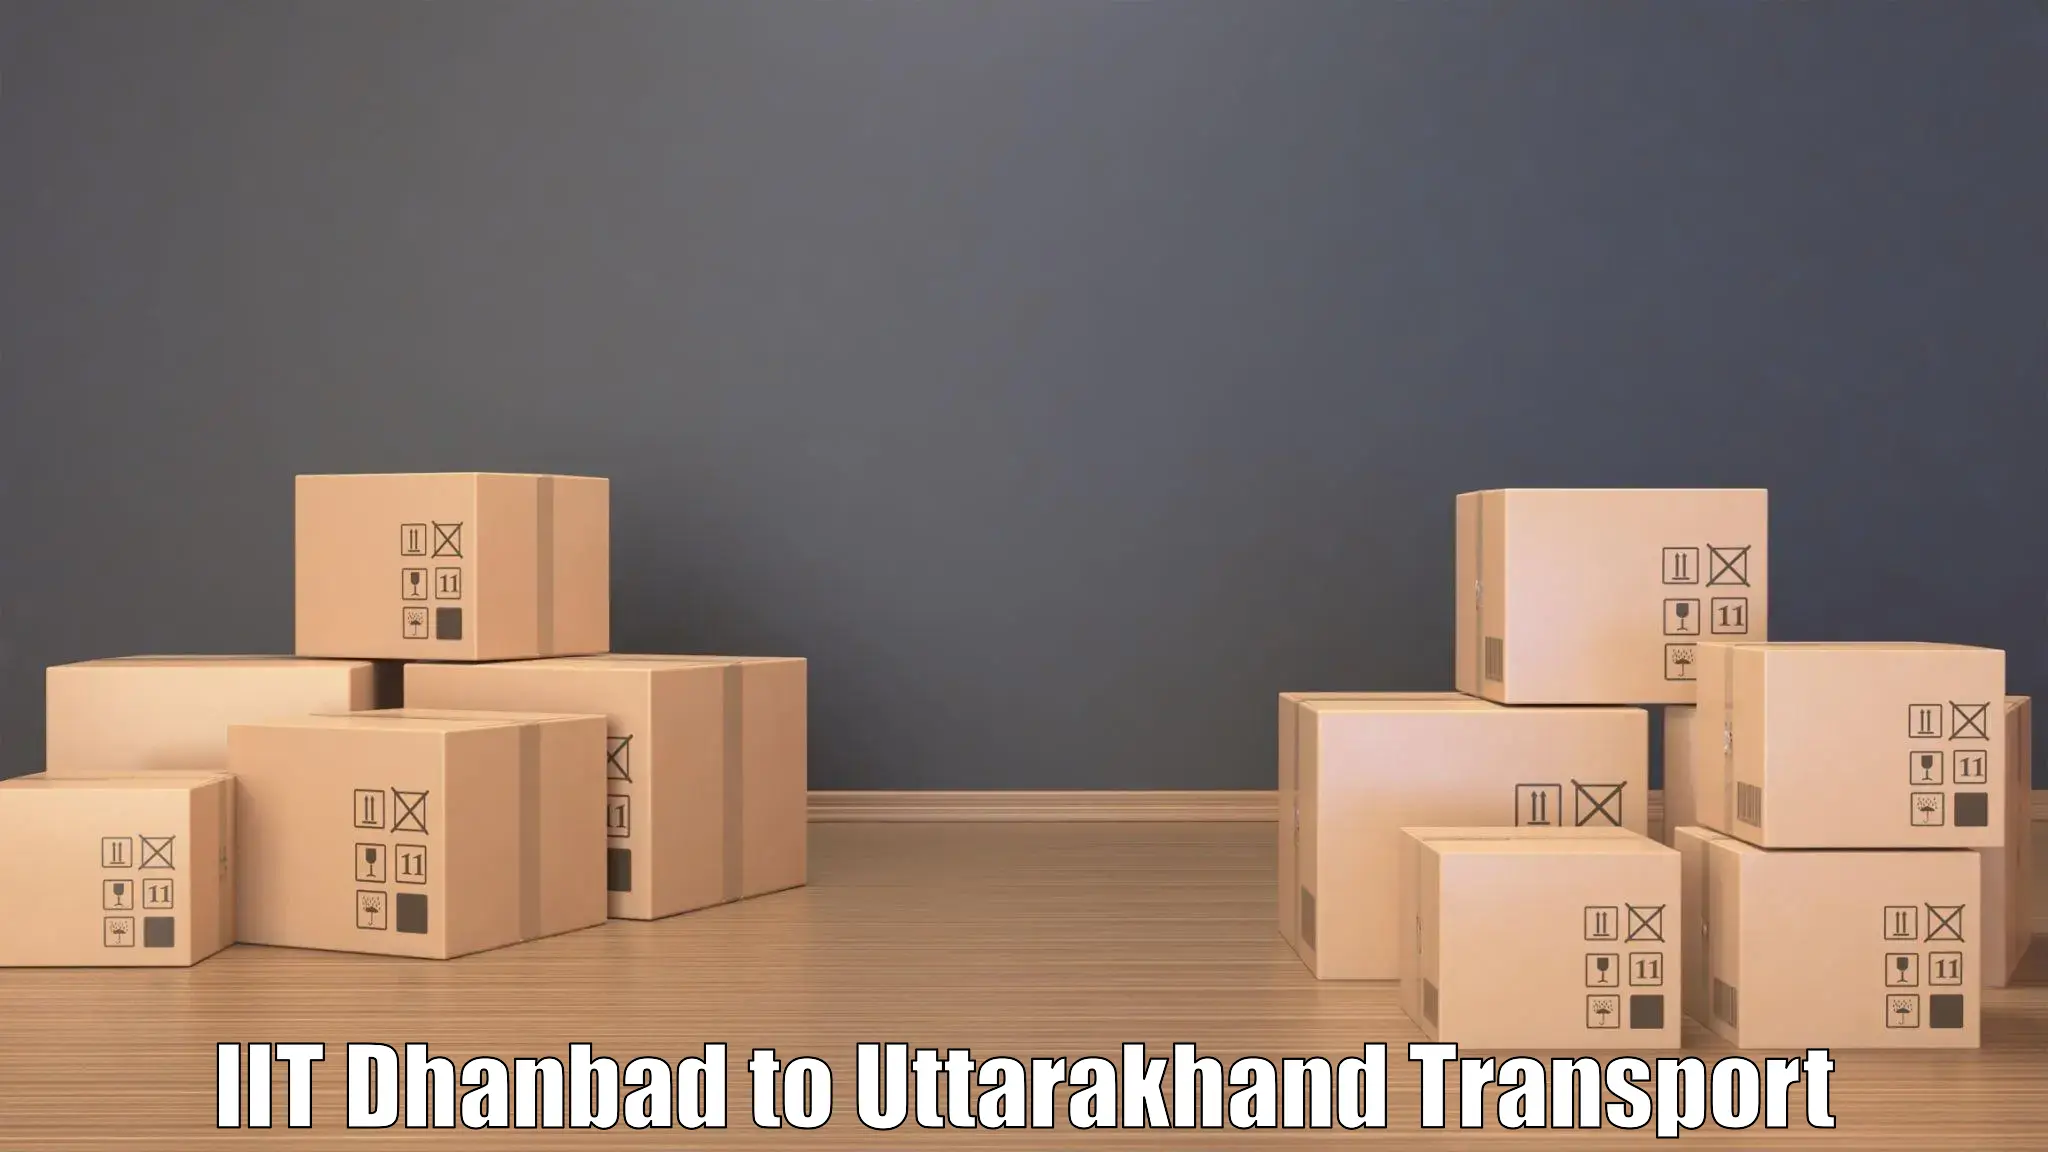 Express transport services in IIT Dhanbad to Dehradun